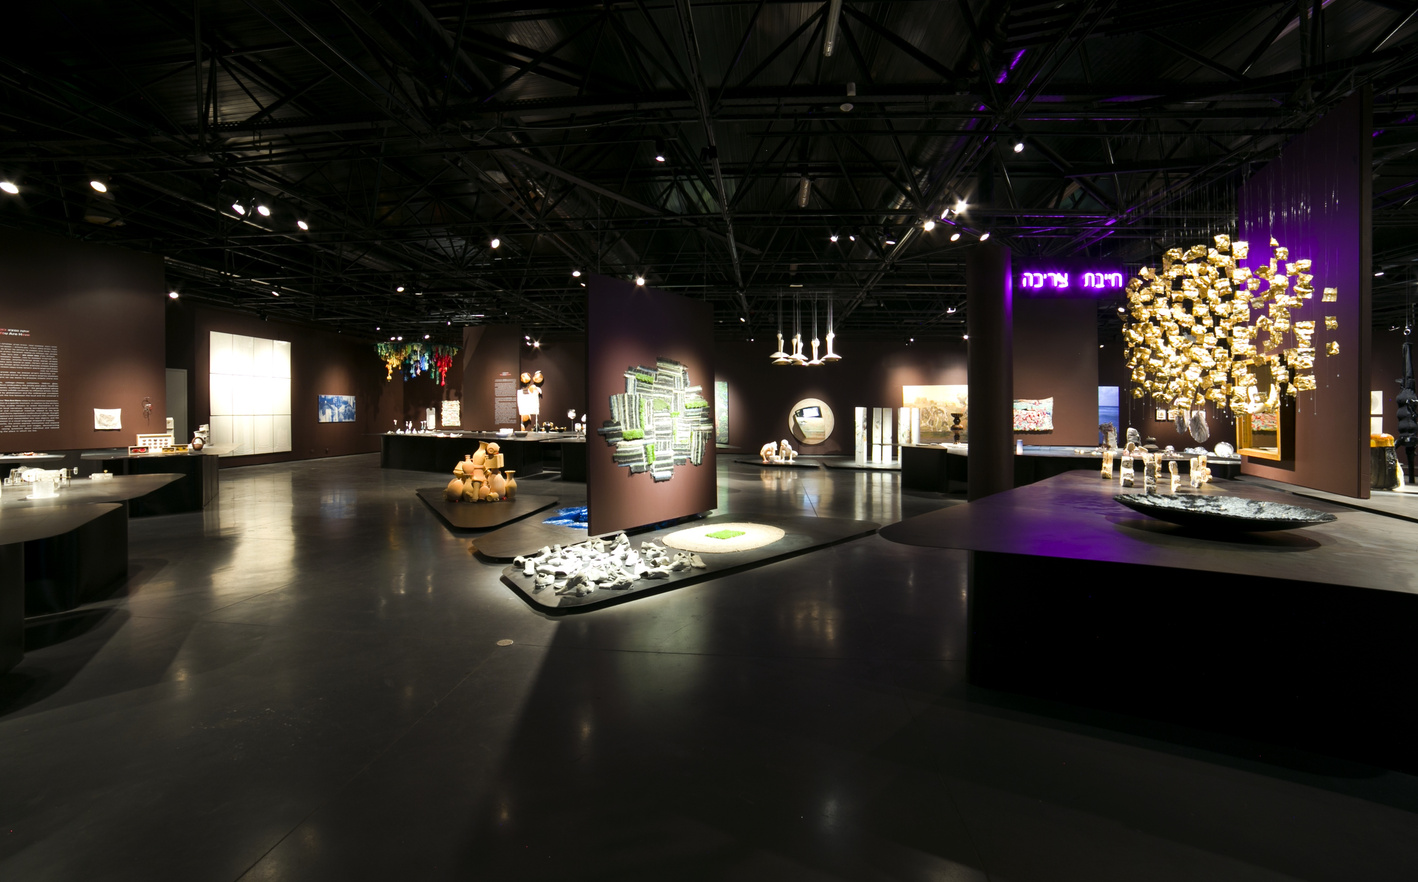 Tel Aviv Biennale exhibition of Craft and Design, MUSA